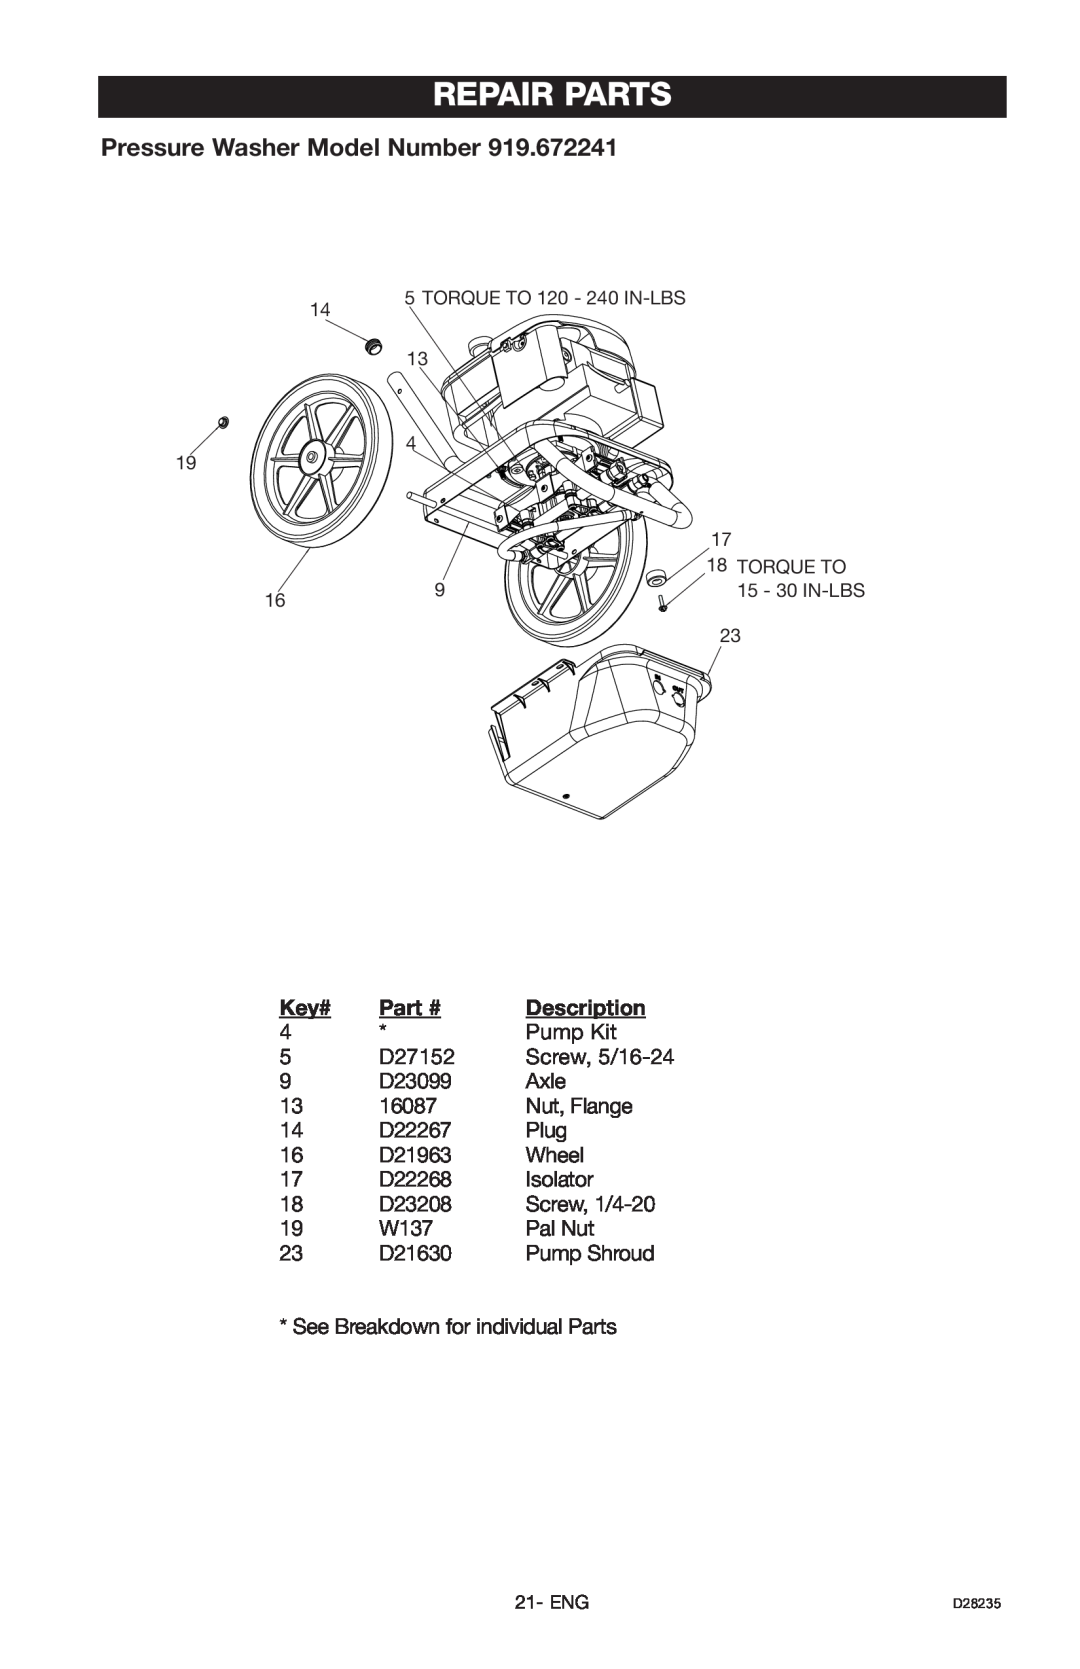 Craftsman 919.672241, D28235 owner manual Repair Parts, Pressure Washer Model Number, Key#, Description 